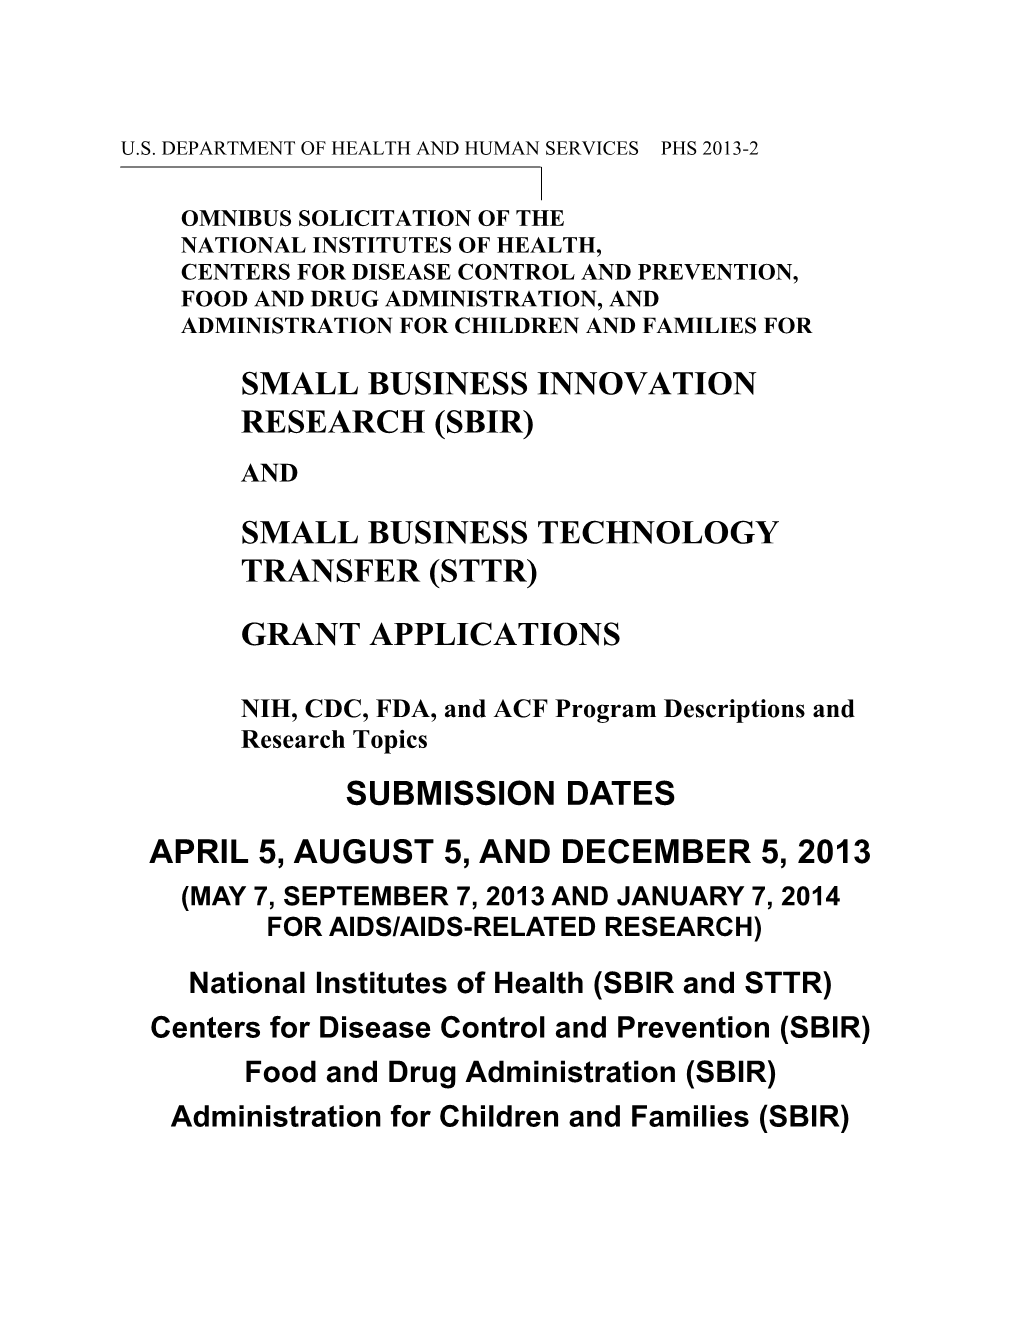 PHS 2012-2 SBIR/STTR Program Descriptions and Research Topics